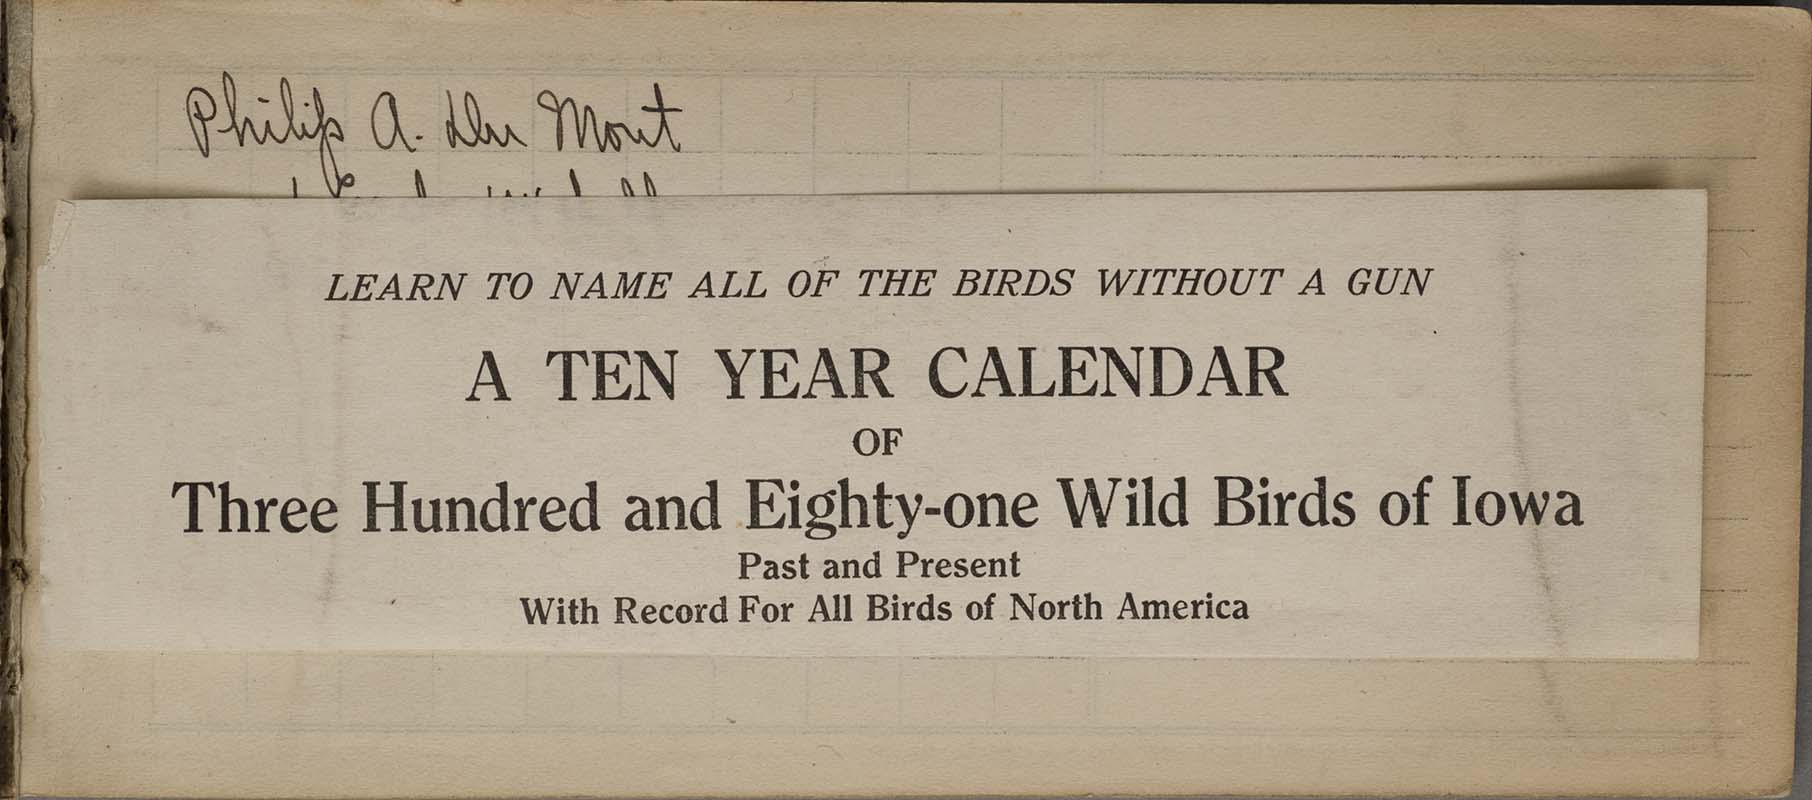 A ten year calendar of three hundred and eighty-one wild birds of Iowa